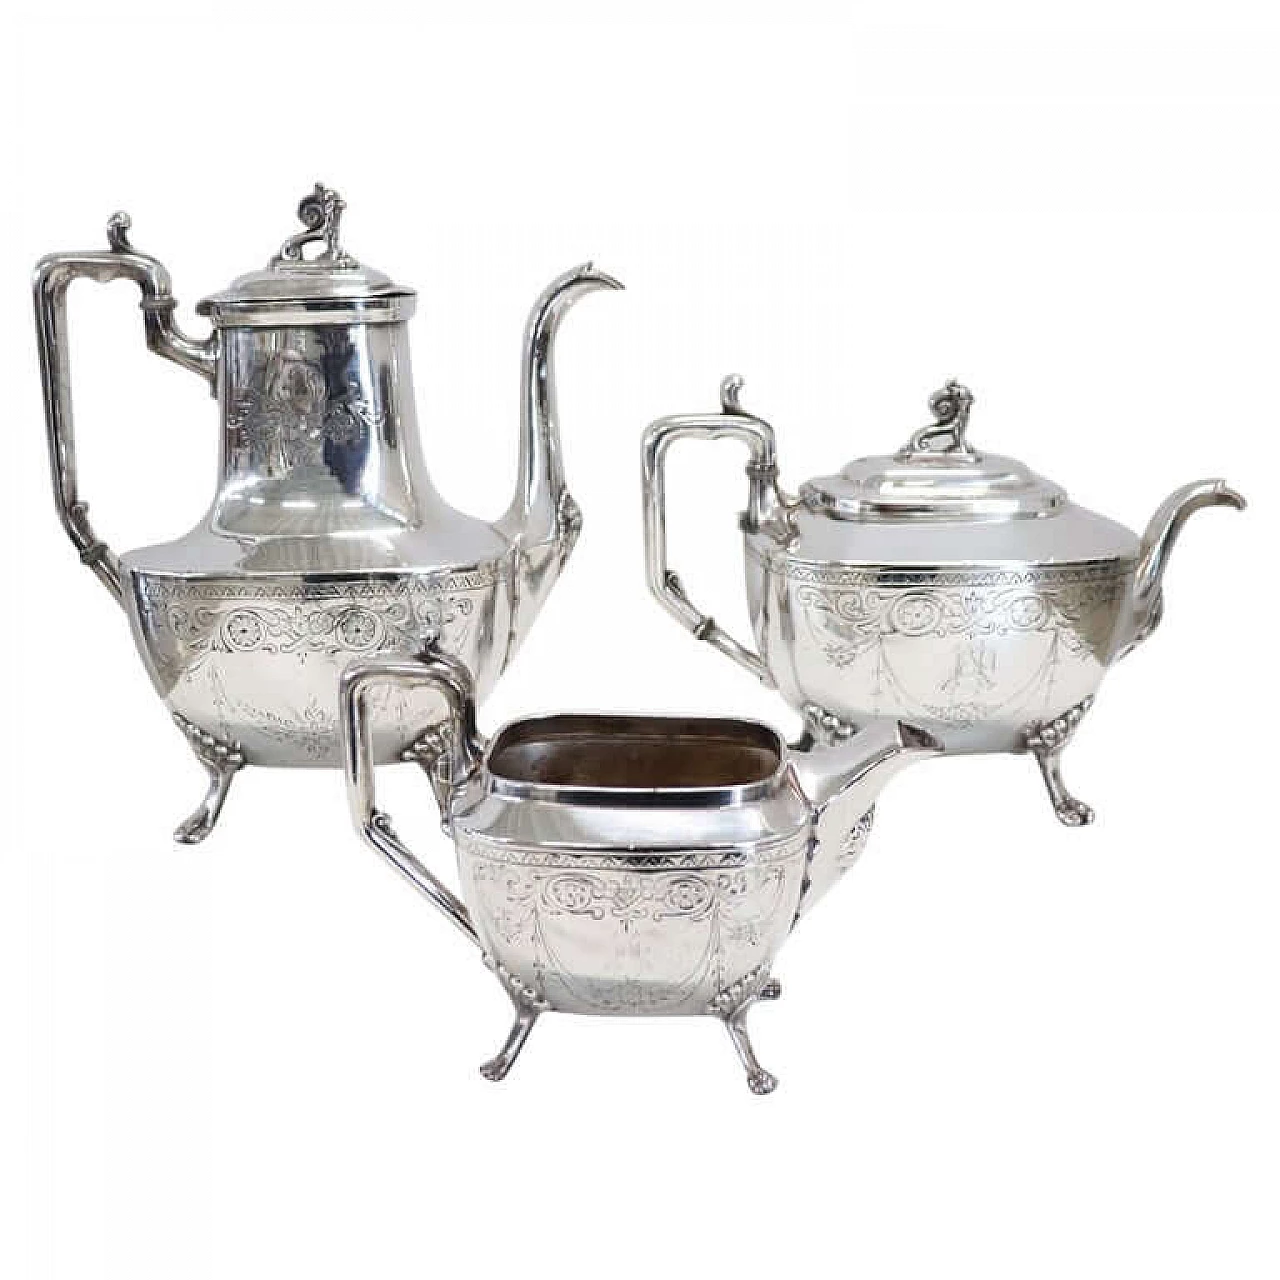 Reed & Barton silver-plated metal tea service, 19th century 1